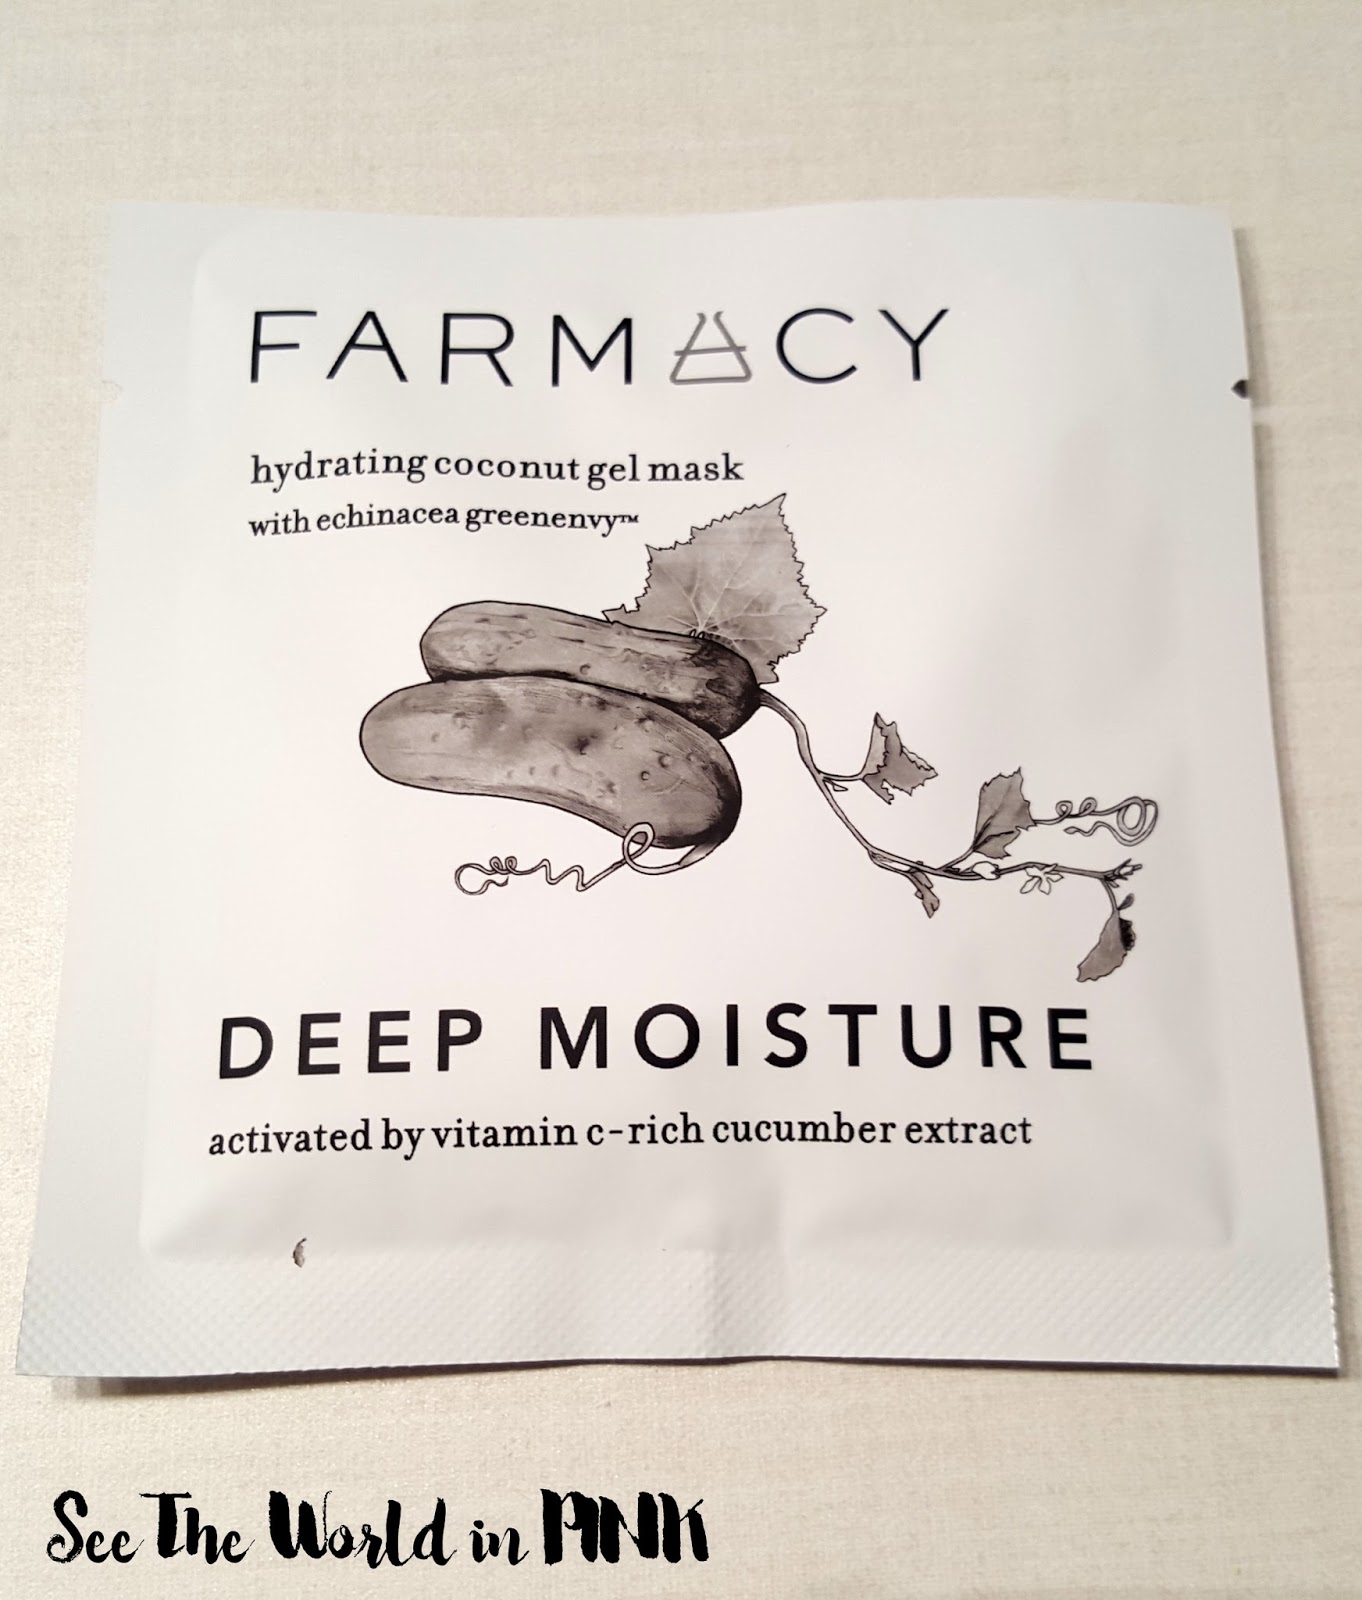 Farmacy Hydrating Coconut Gel Mask - Deep Moisture (Cucumber)